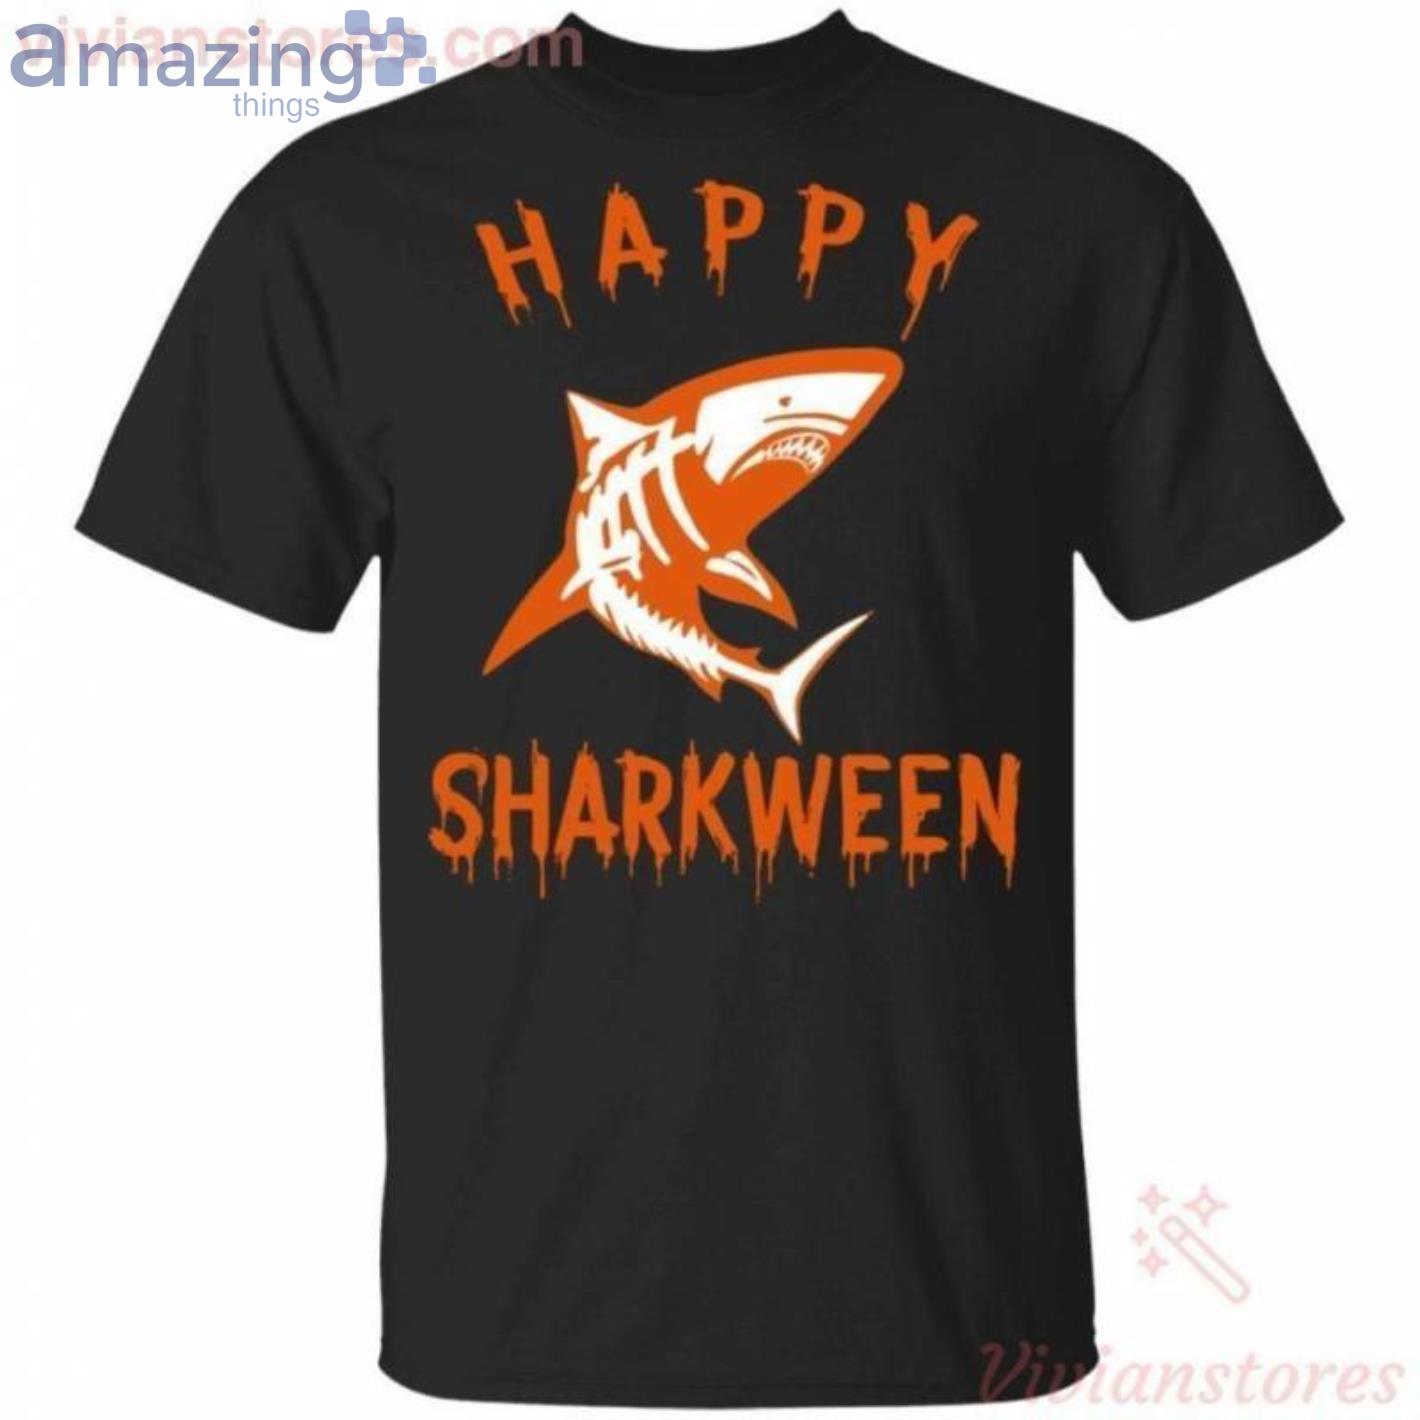 Sharkween Happy Halloween Kids Funny T-Shirt Product Photo 1